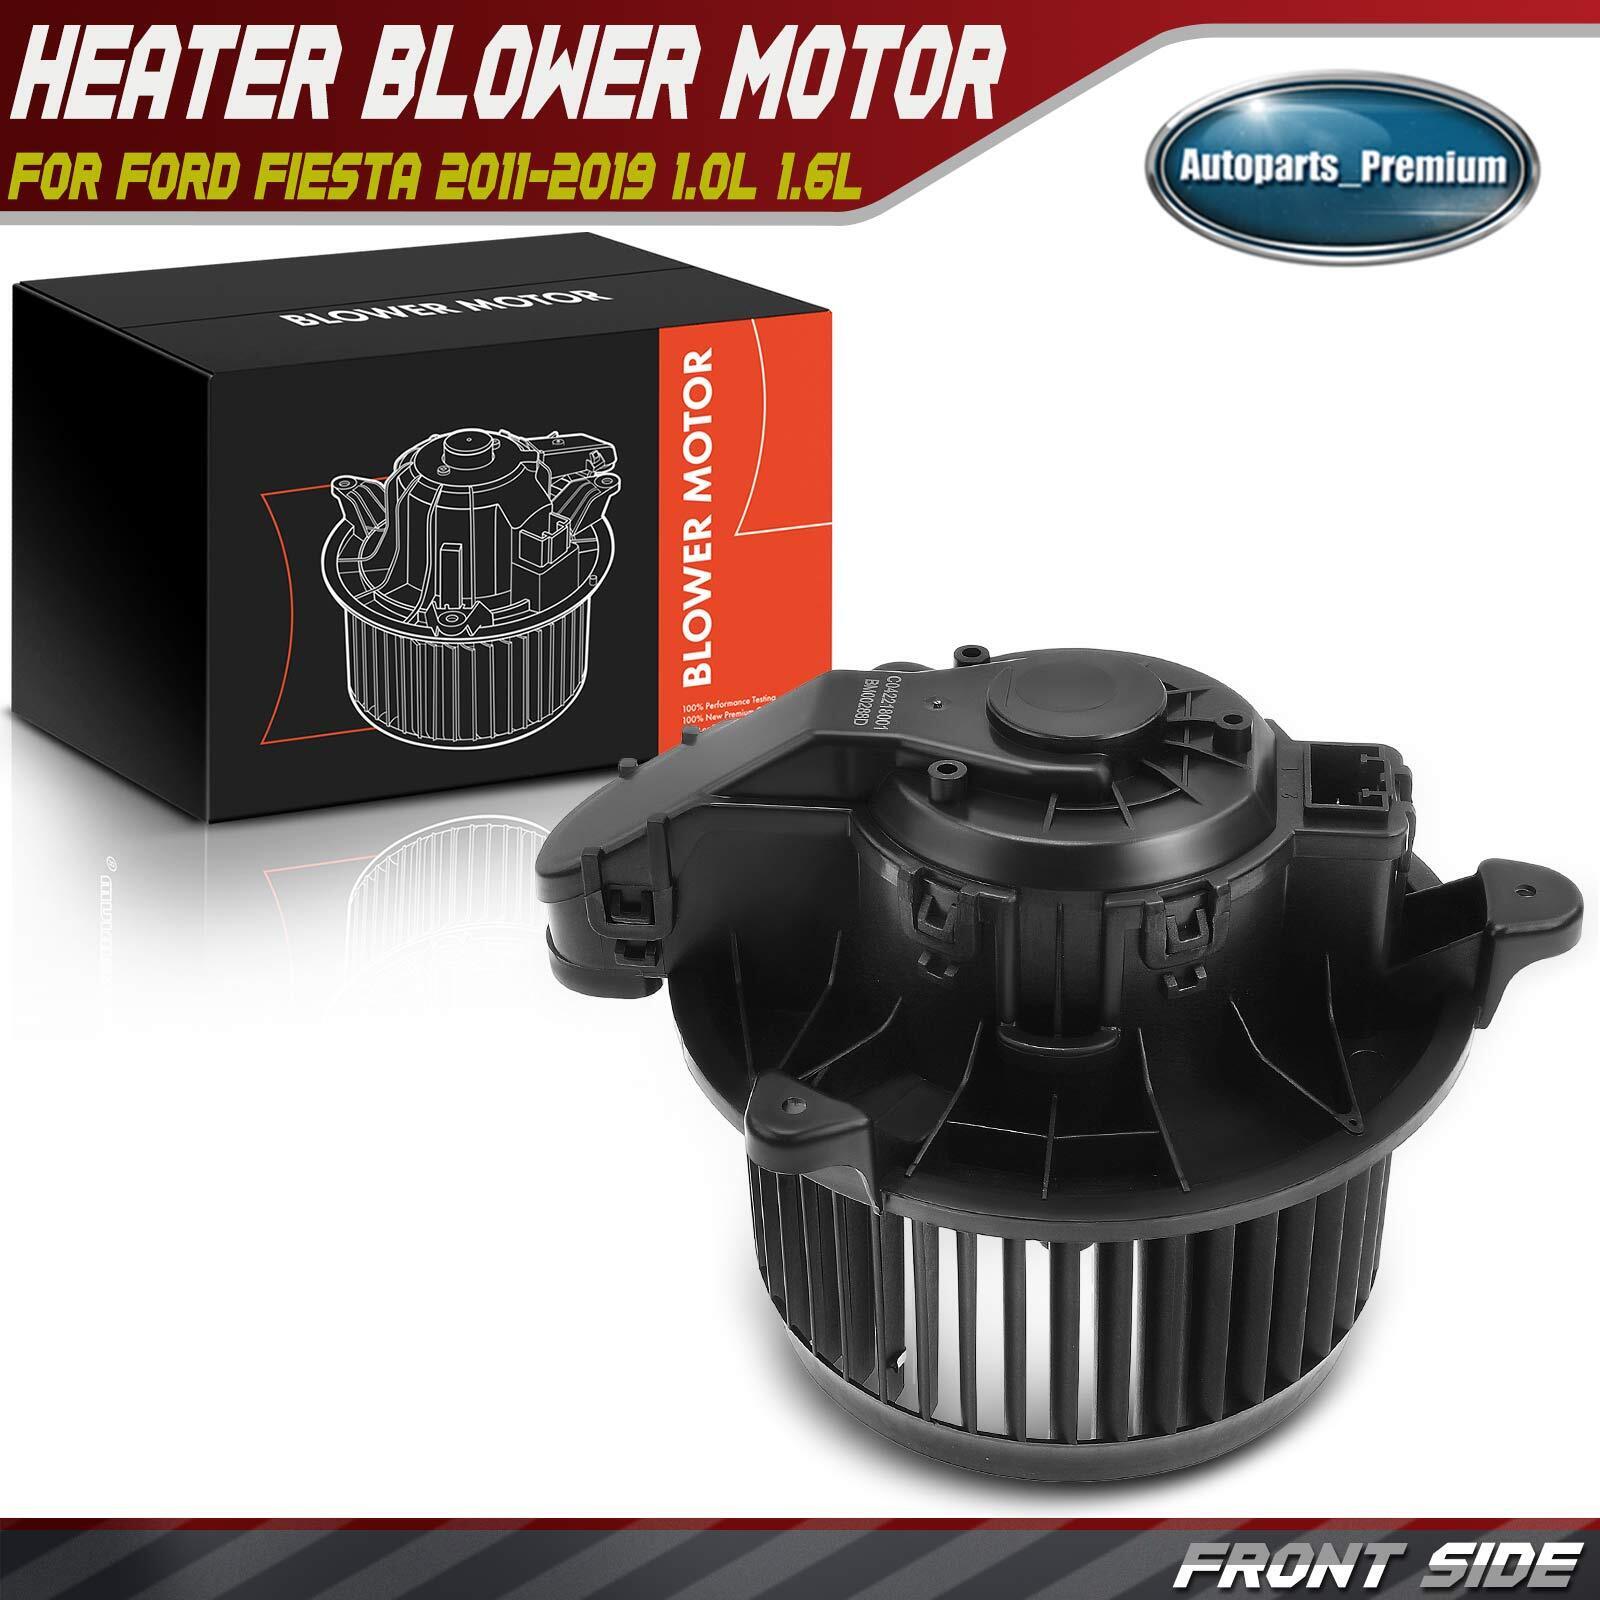 HVAC Heater Blower Motor Fan Assembly for Ford Fiesta 2011-2019 1.0L 1.6L Front